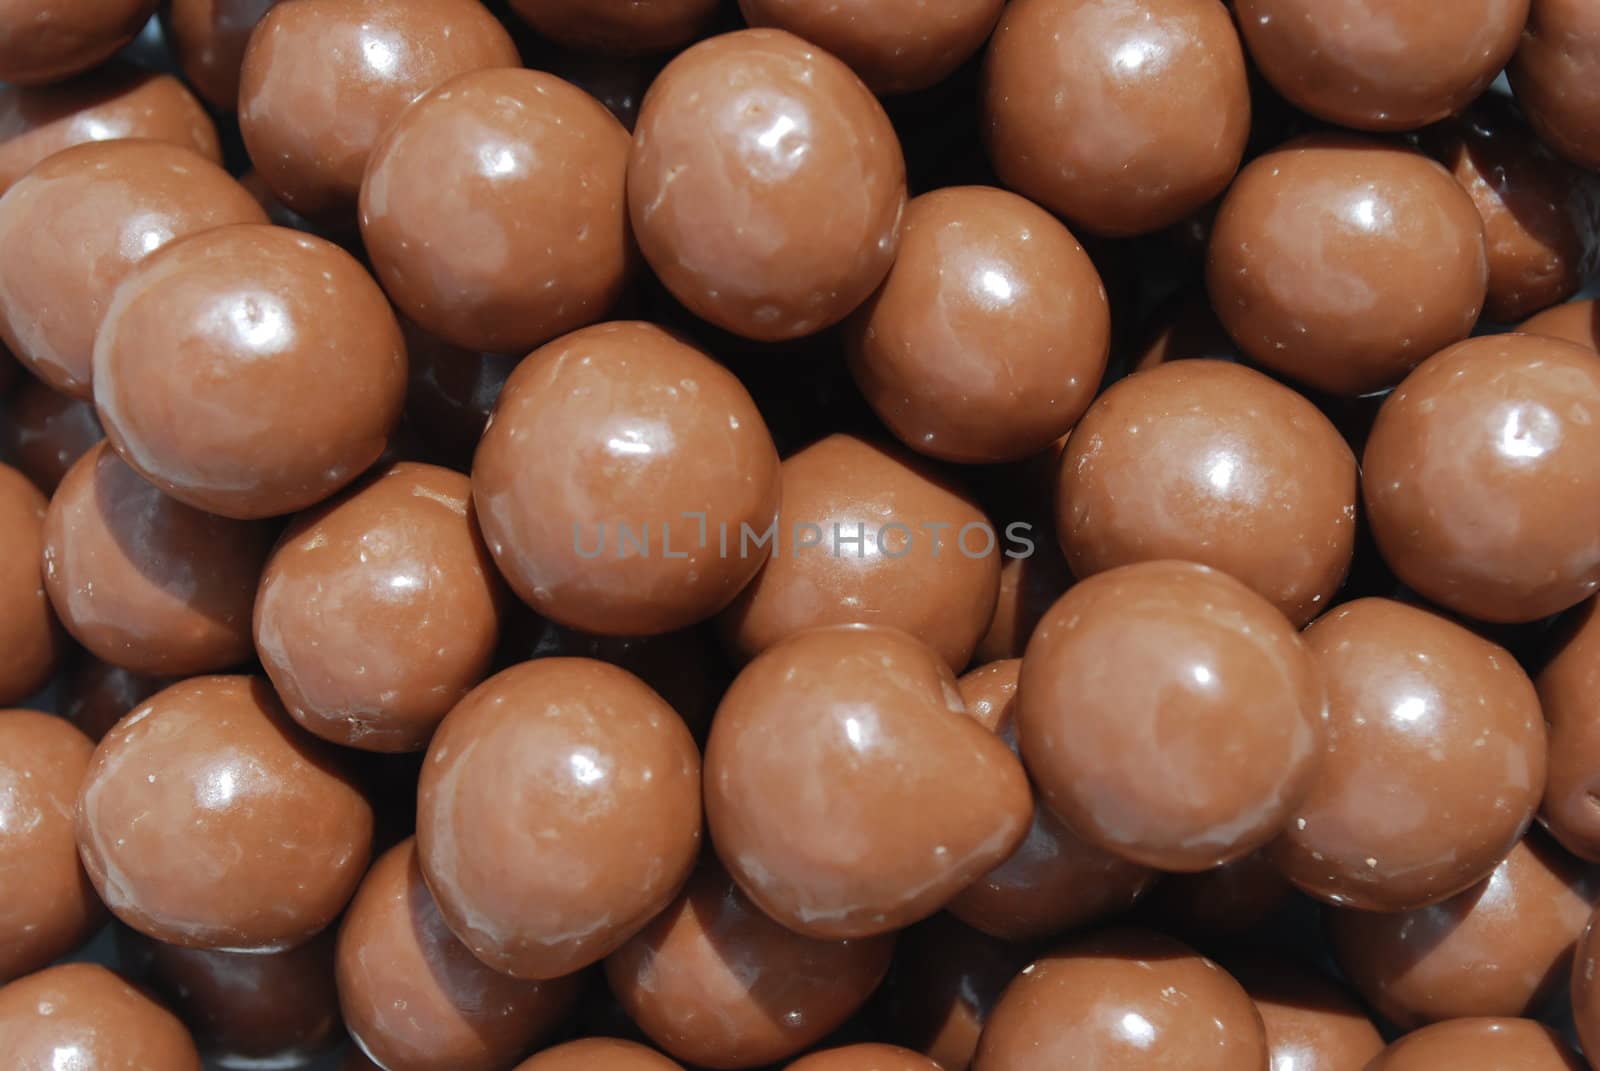 delicious chocolate balls for desert